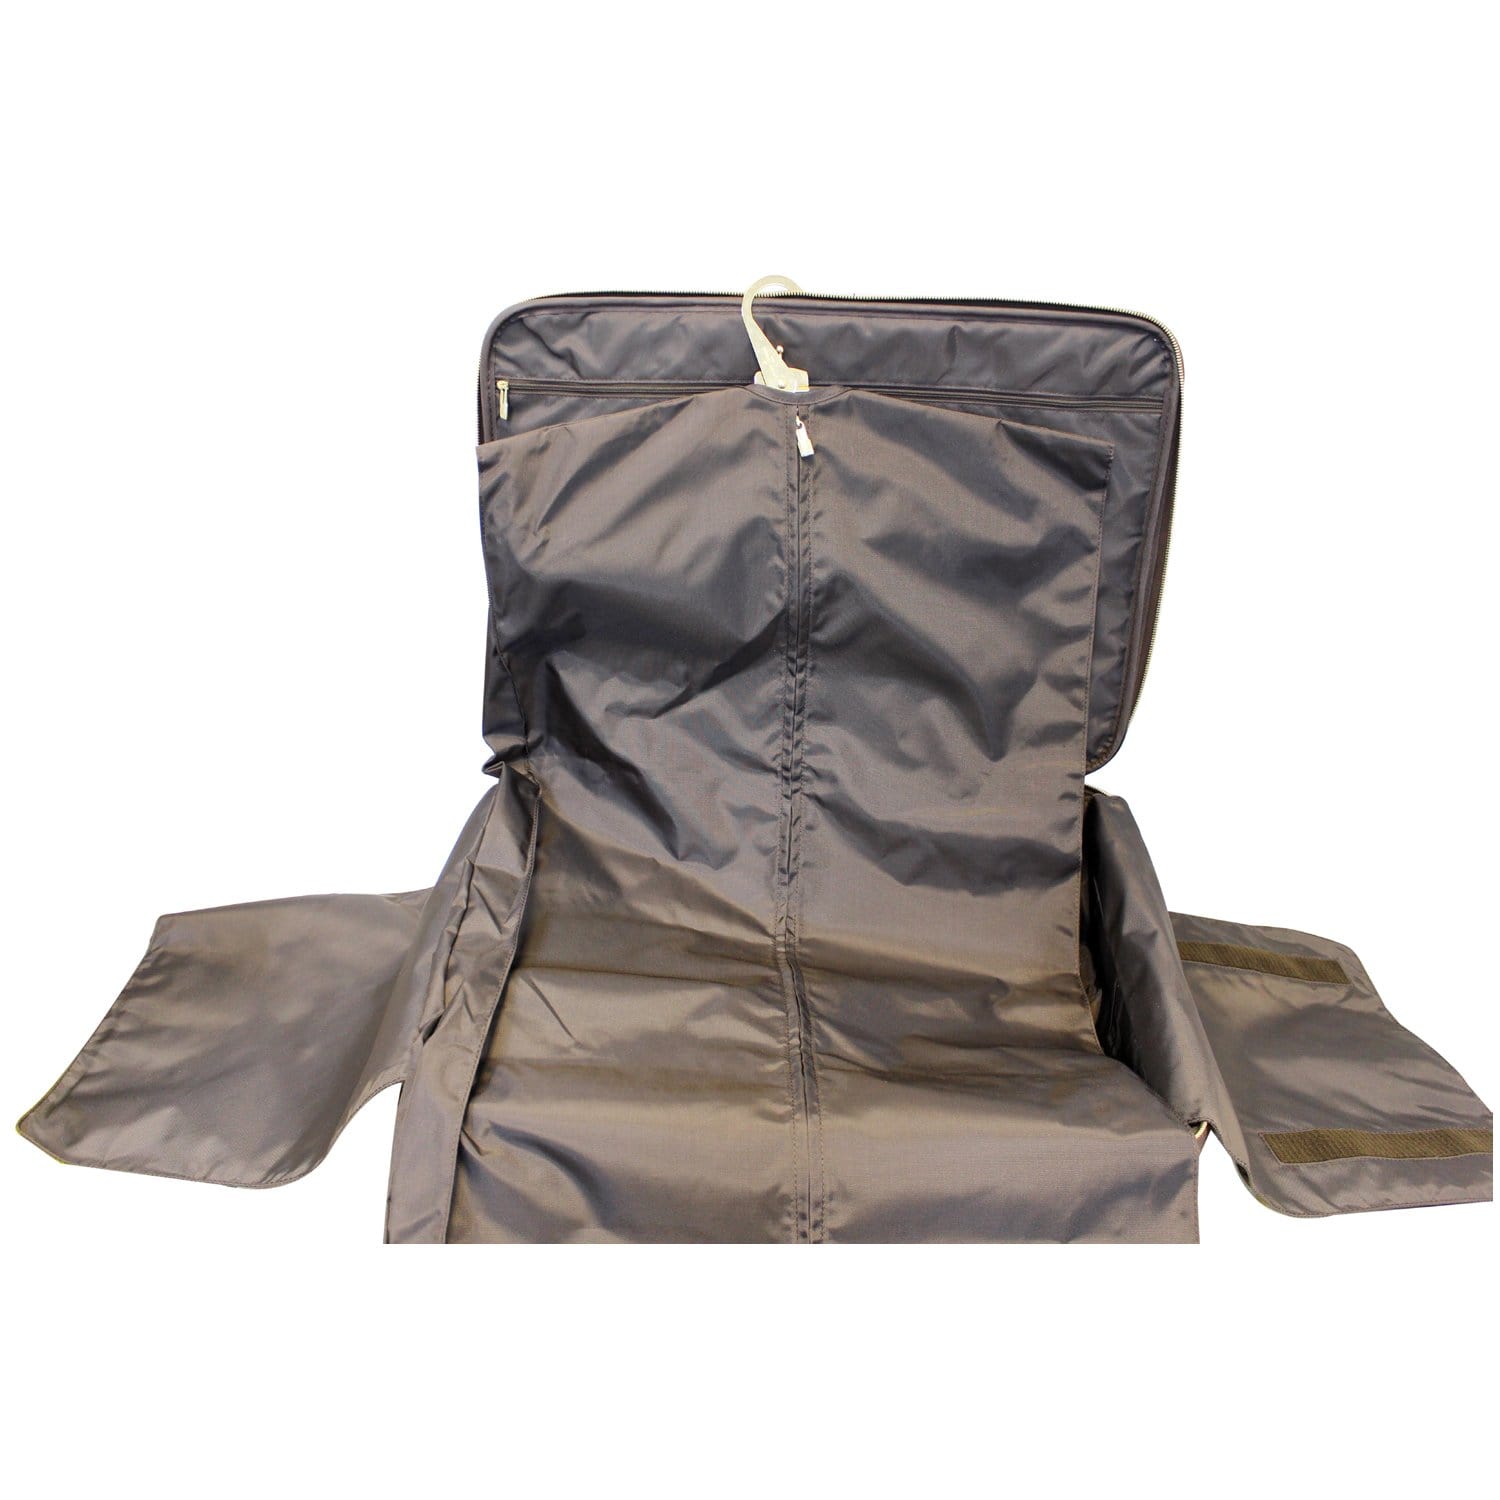 Louis Vuitton Monogram Soft Case Trolley Bag Monogram Pegas 55 M23250